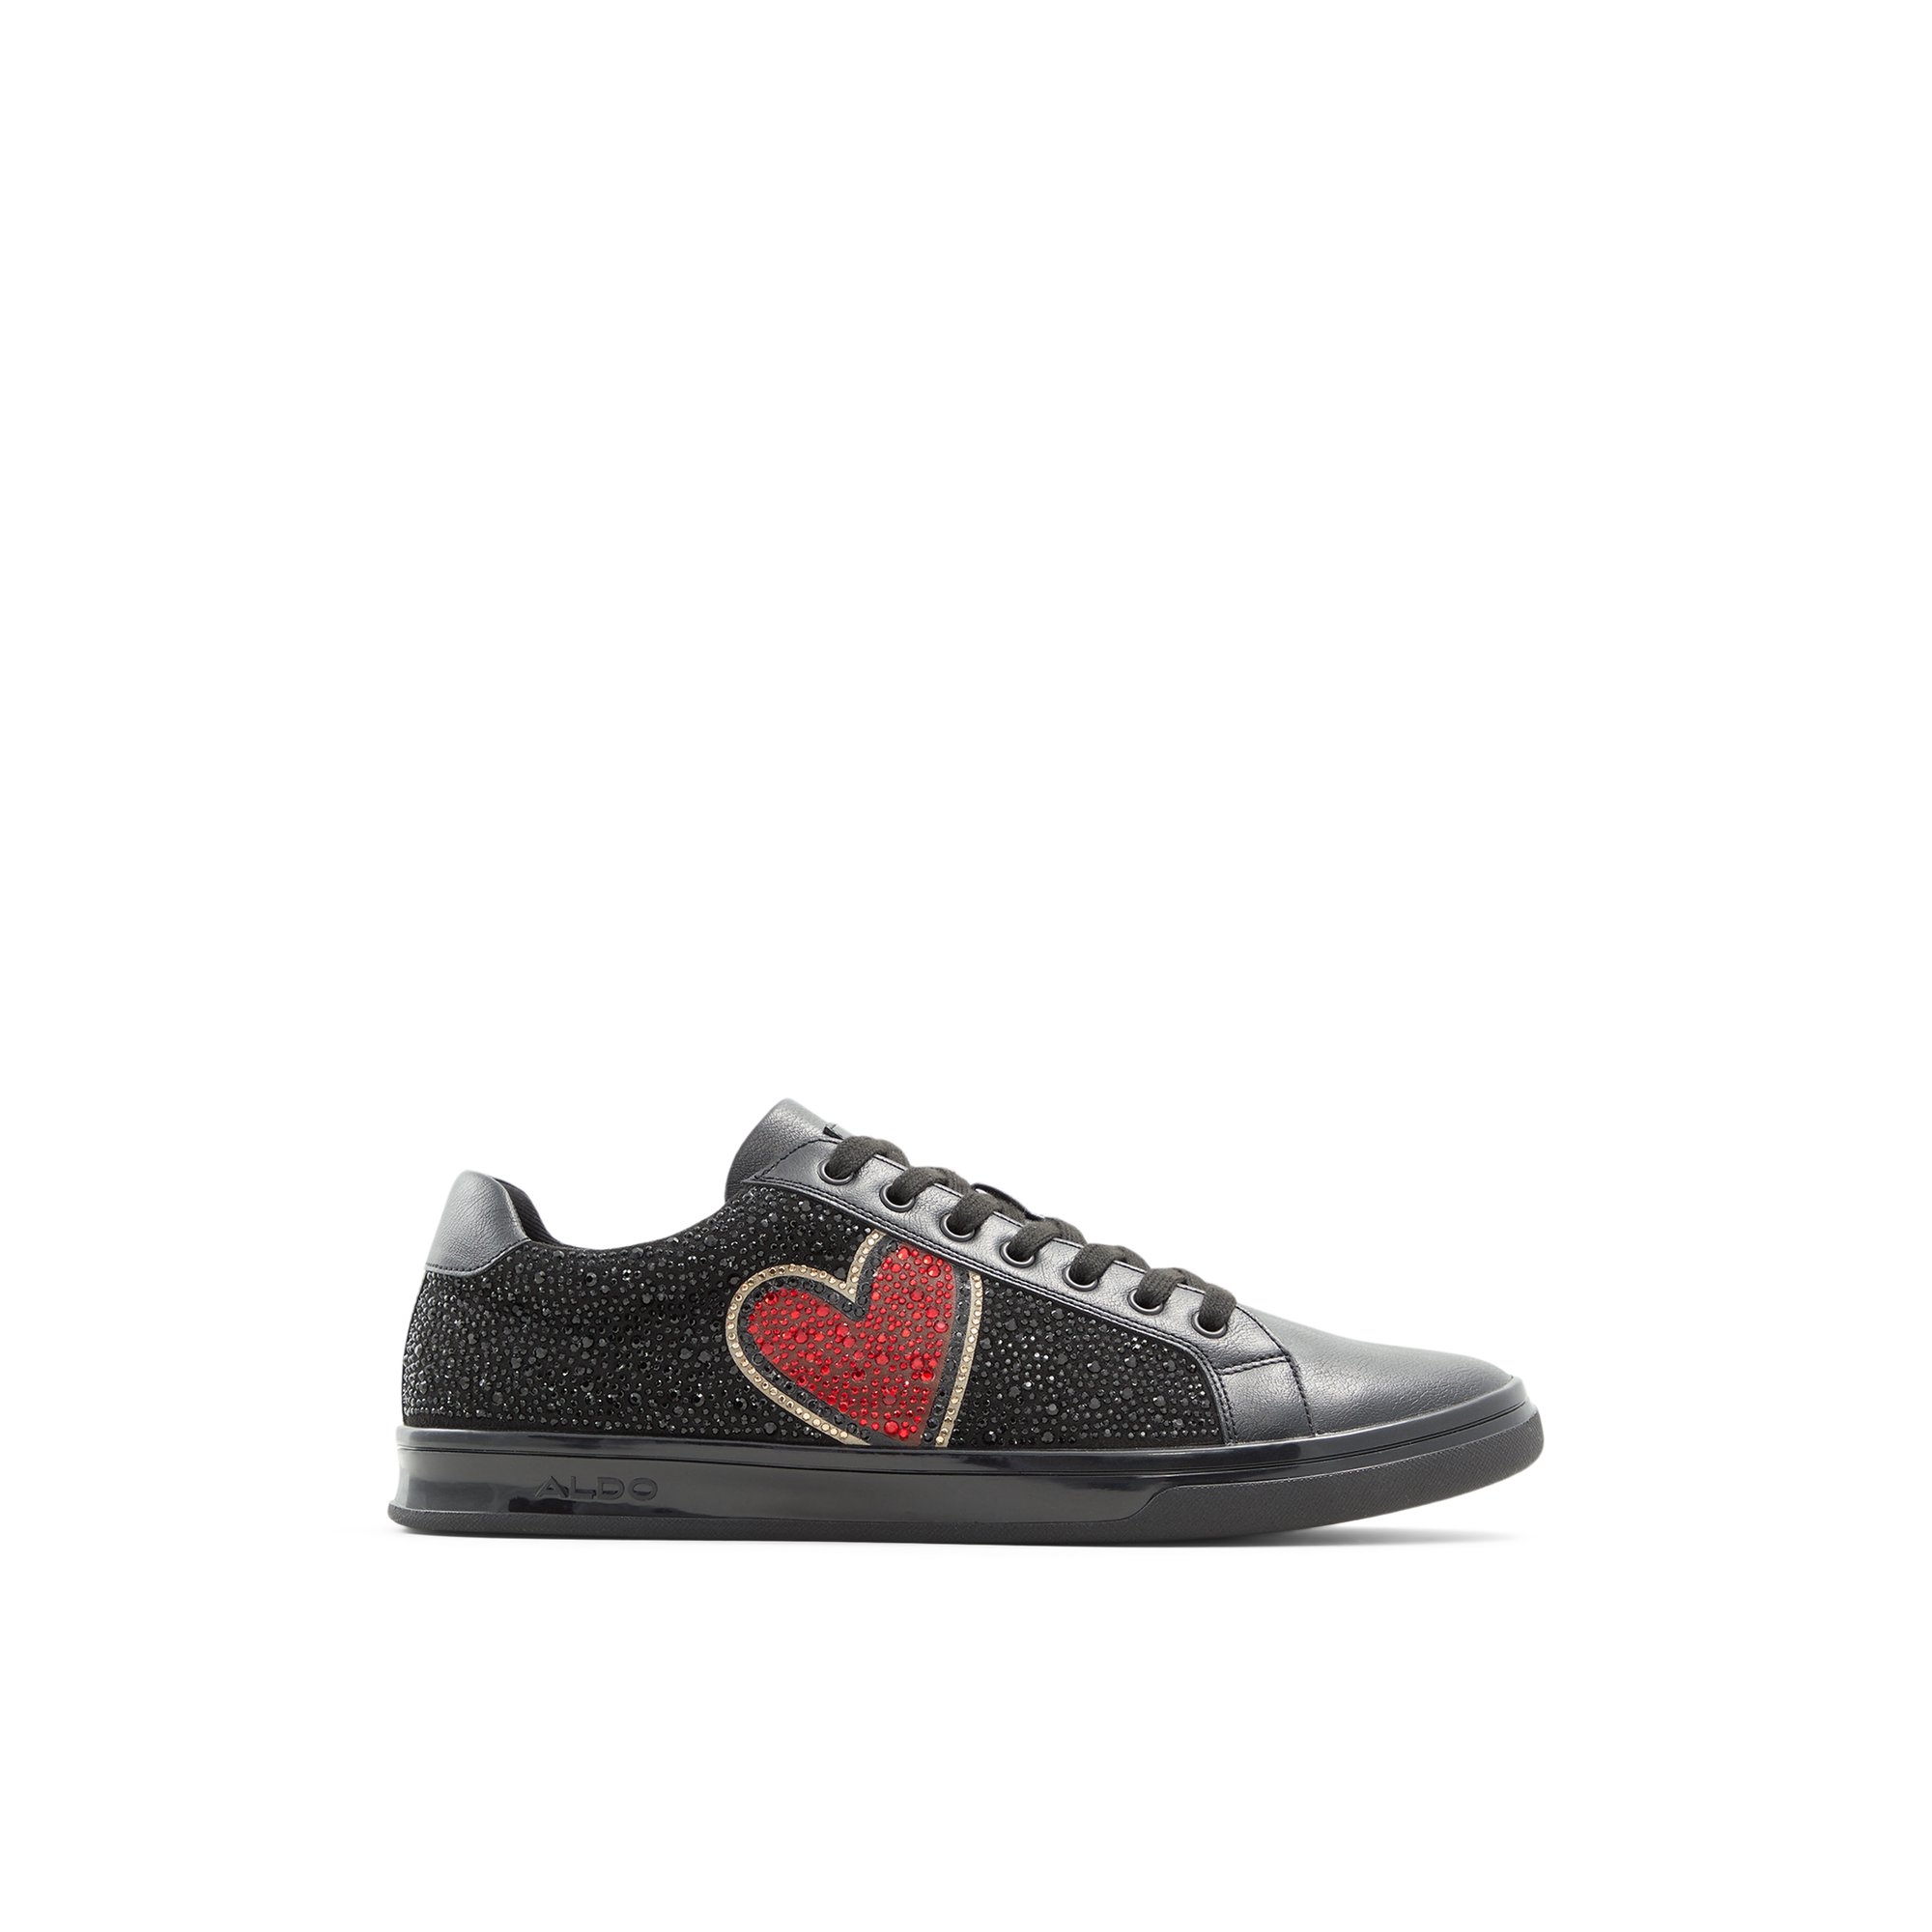 Image of ALDO Carapetos - Men's Low Top Sneakers - Black, Size 9